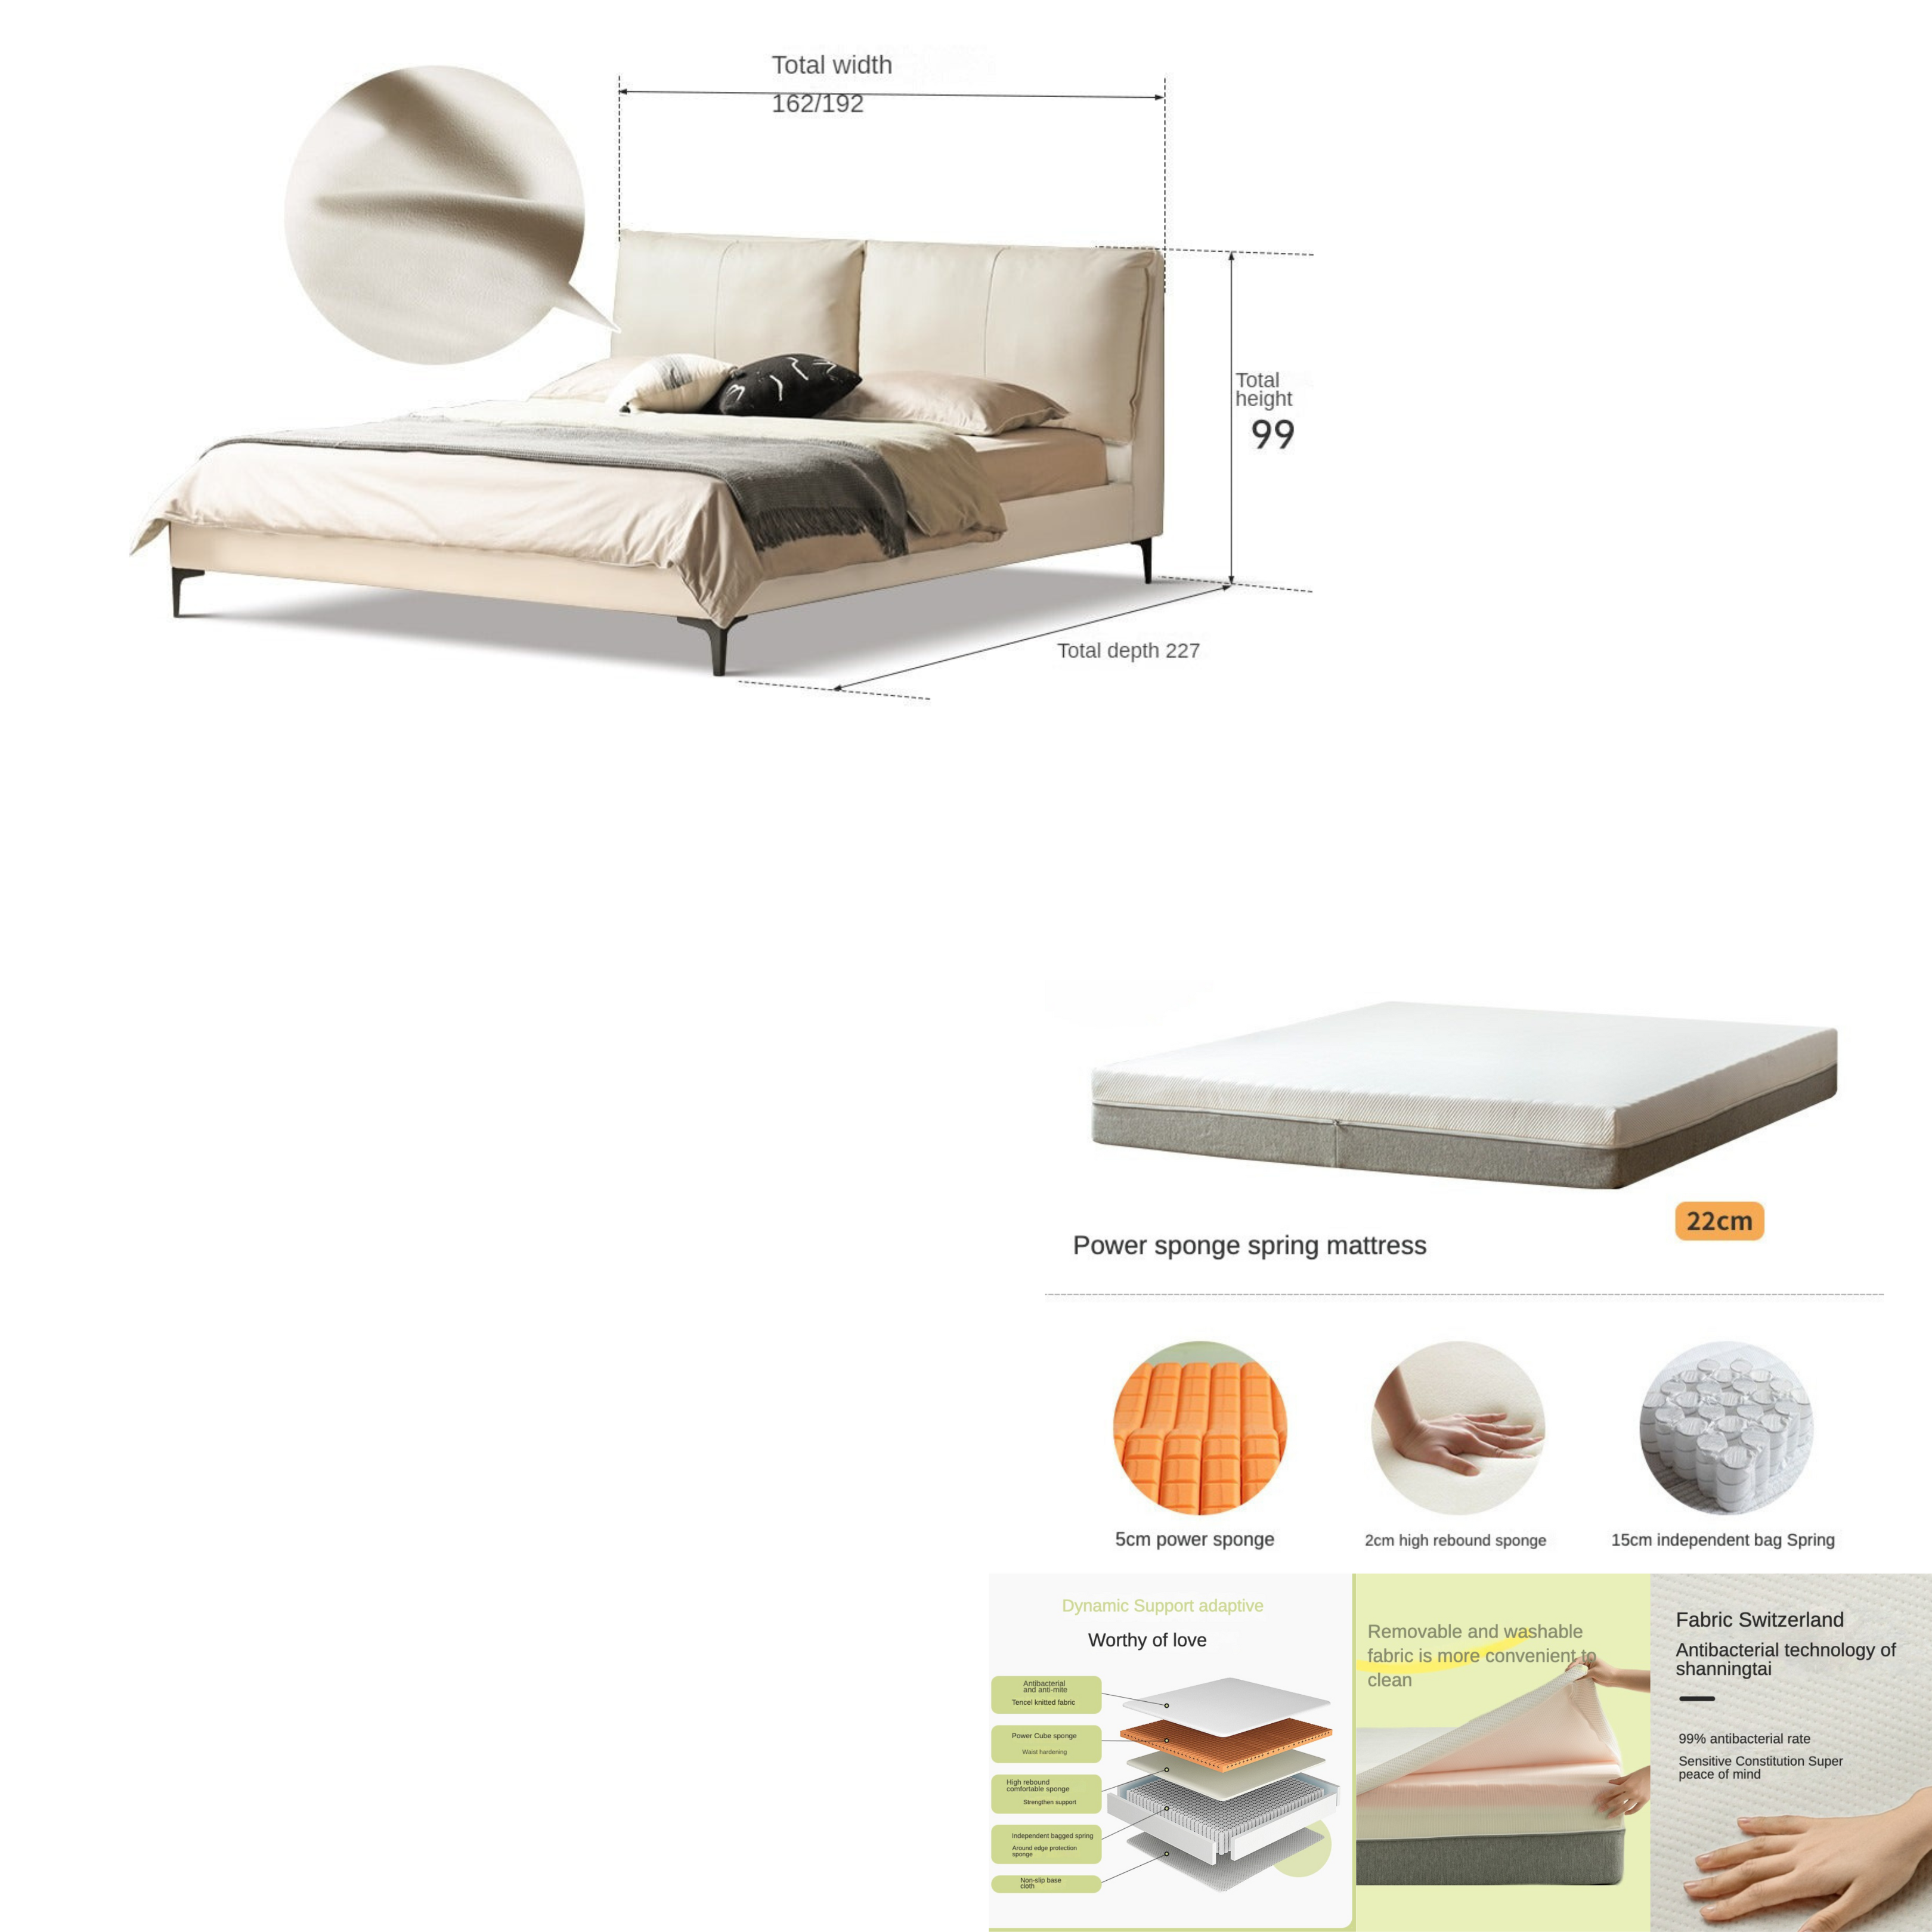 Technology Fabric Art Bed "